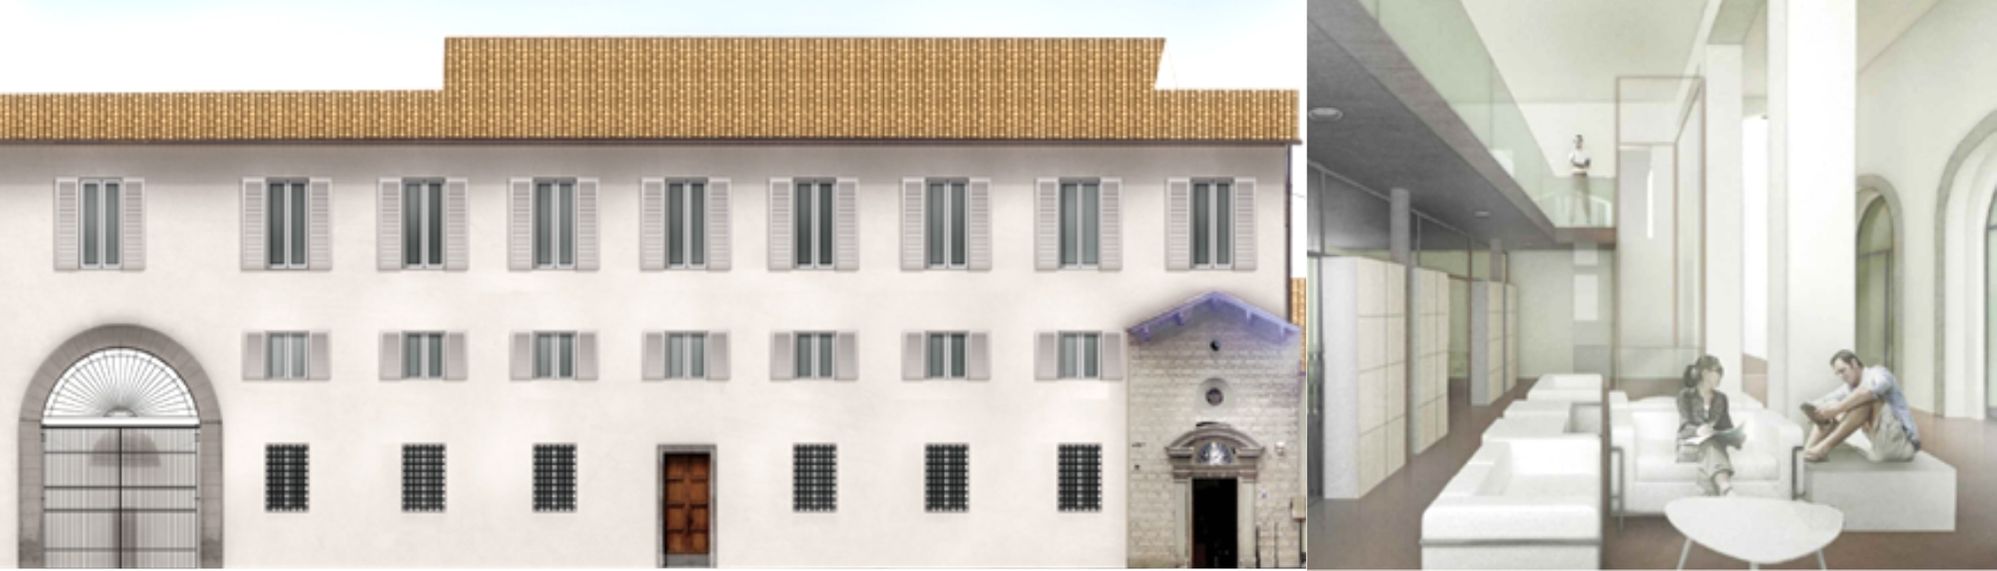 Palazzo Buontalenti_rendering 